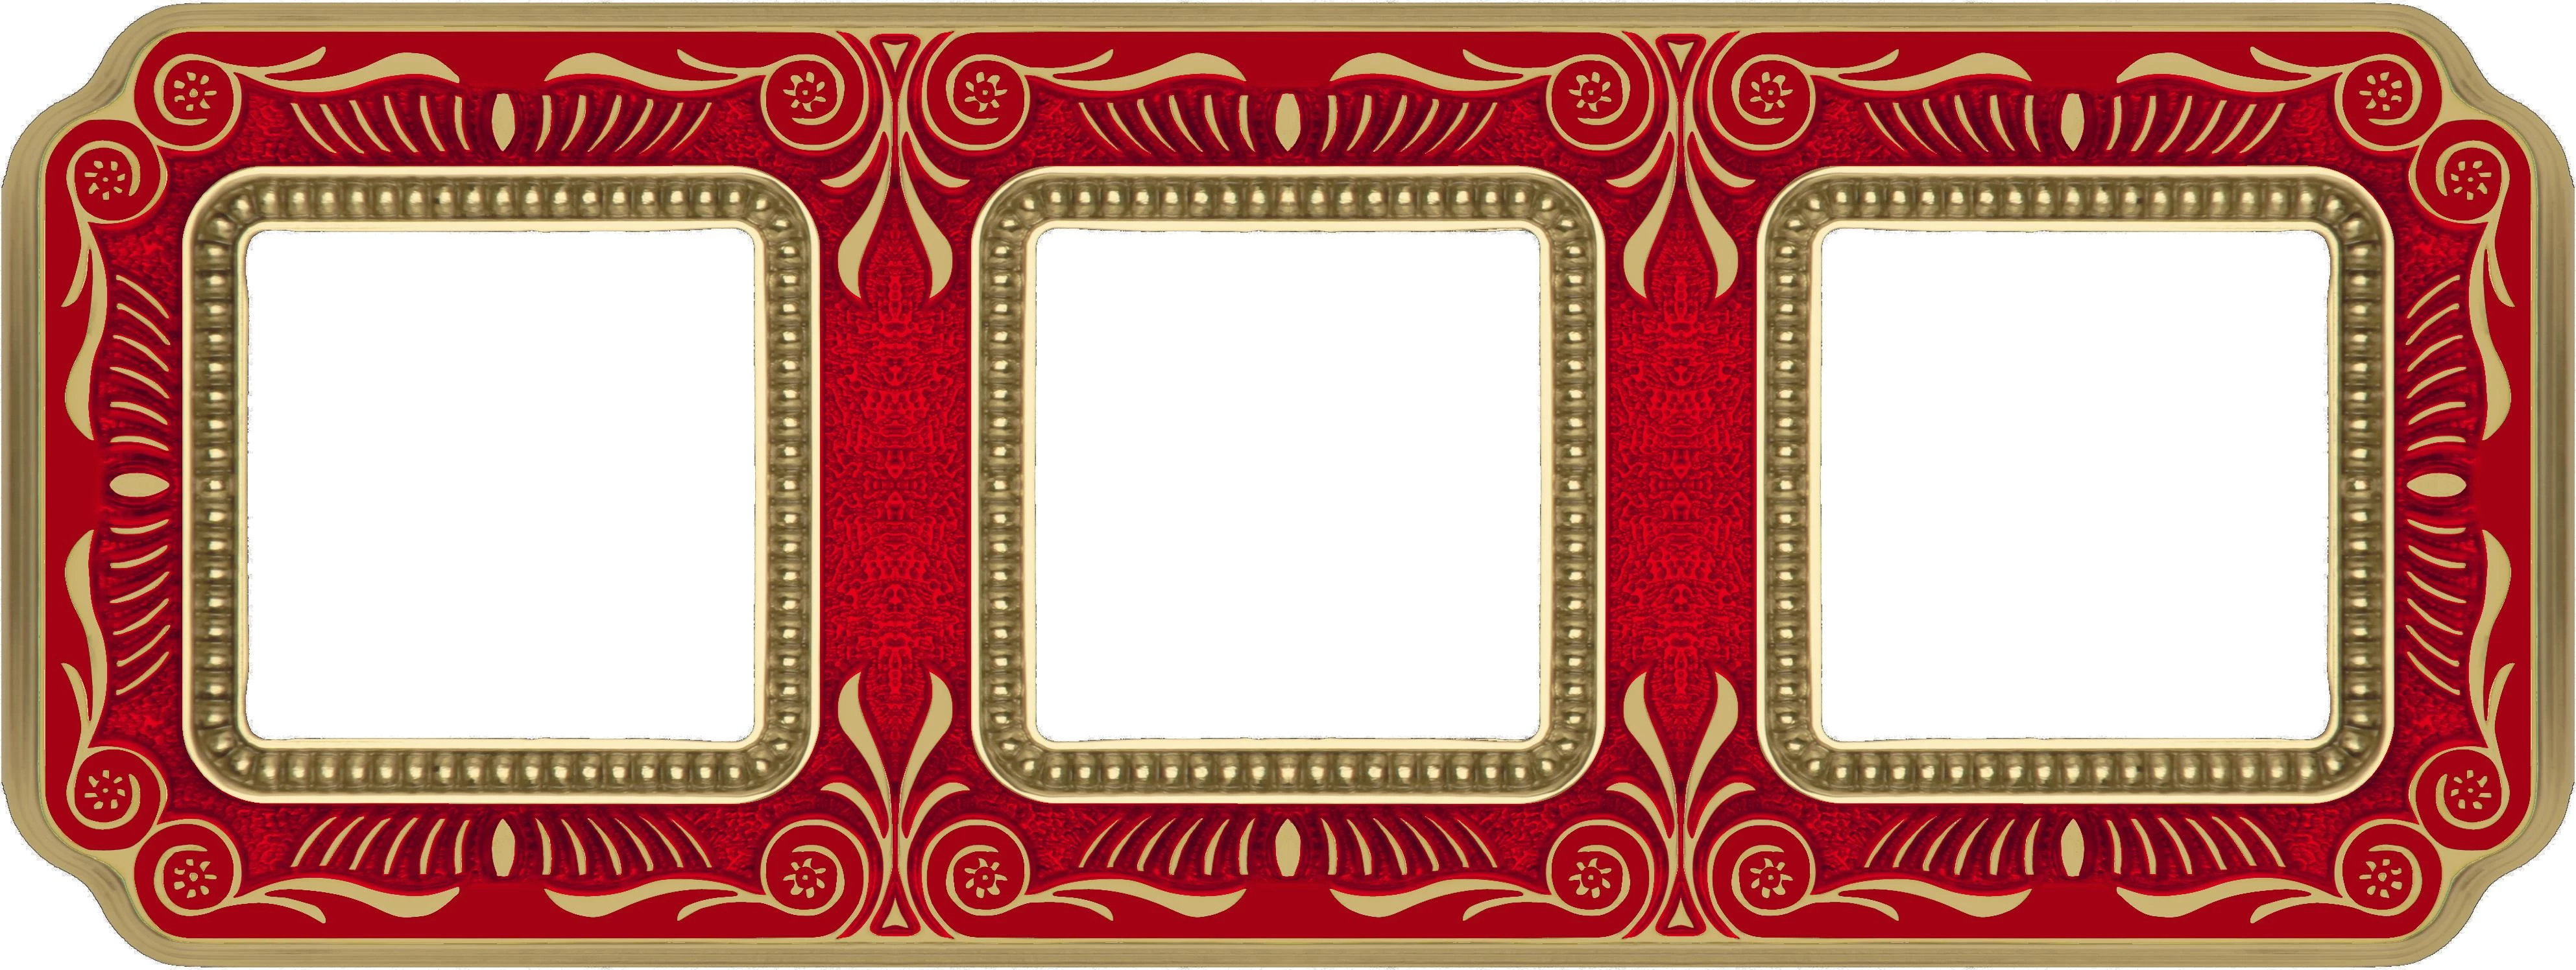  артикул FD01363ROEN название Рамка 3-ая (тройная), цвет Рубиново-красный, Firenze, Fede